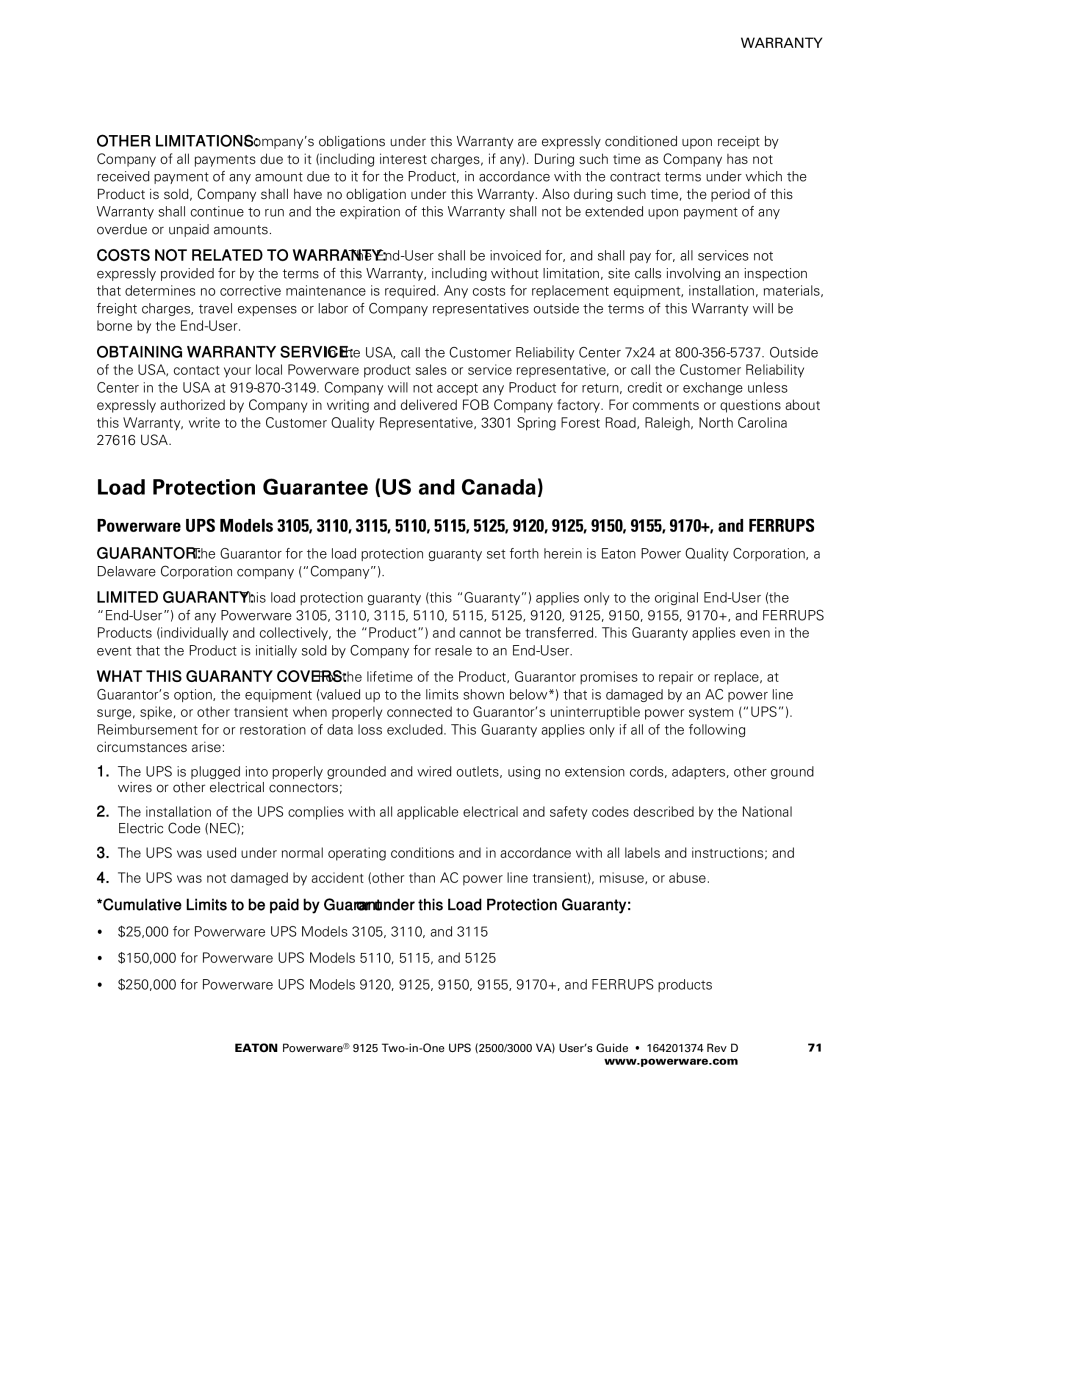 Powerware 2500 manual Load Protection Guarantee US and Canada 